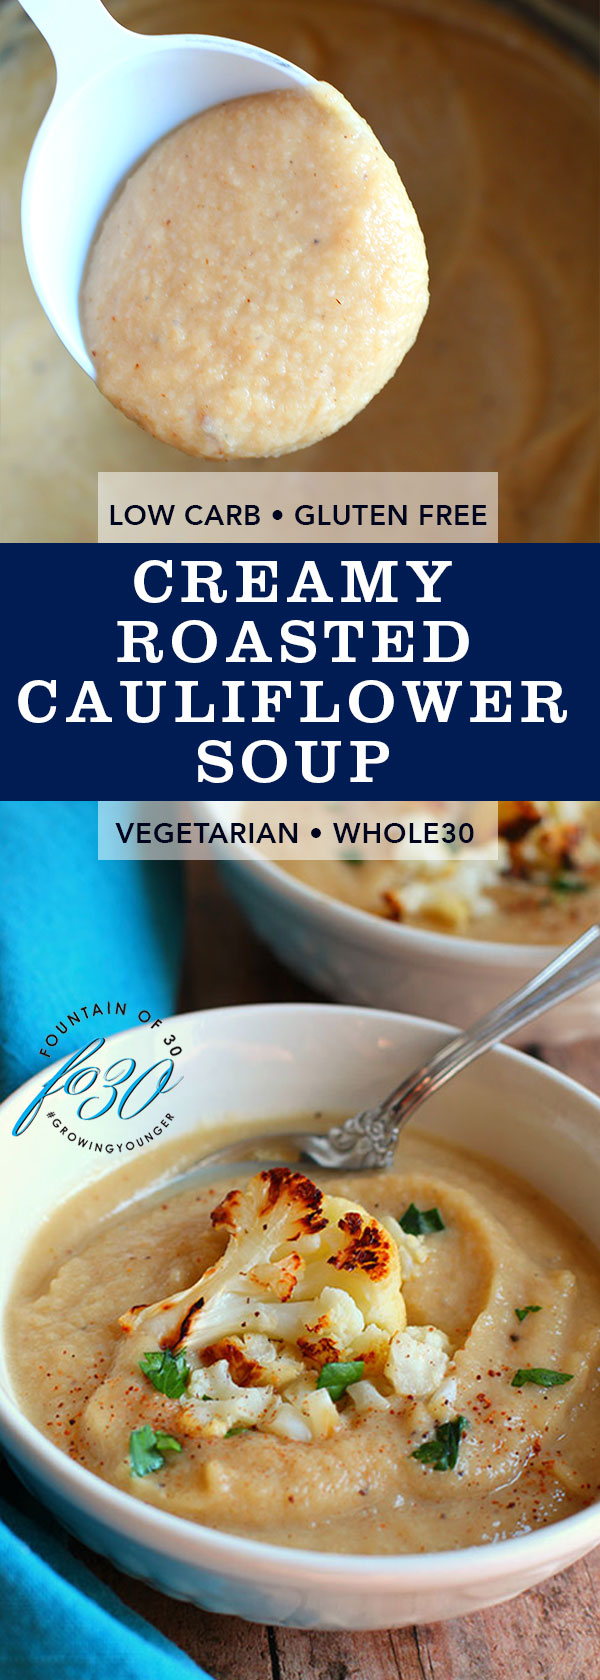 creamy roasted cauliflower soup fountainof30